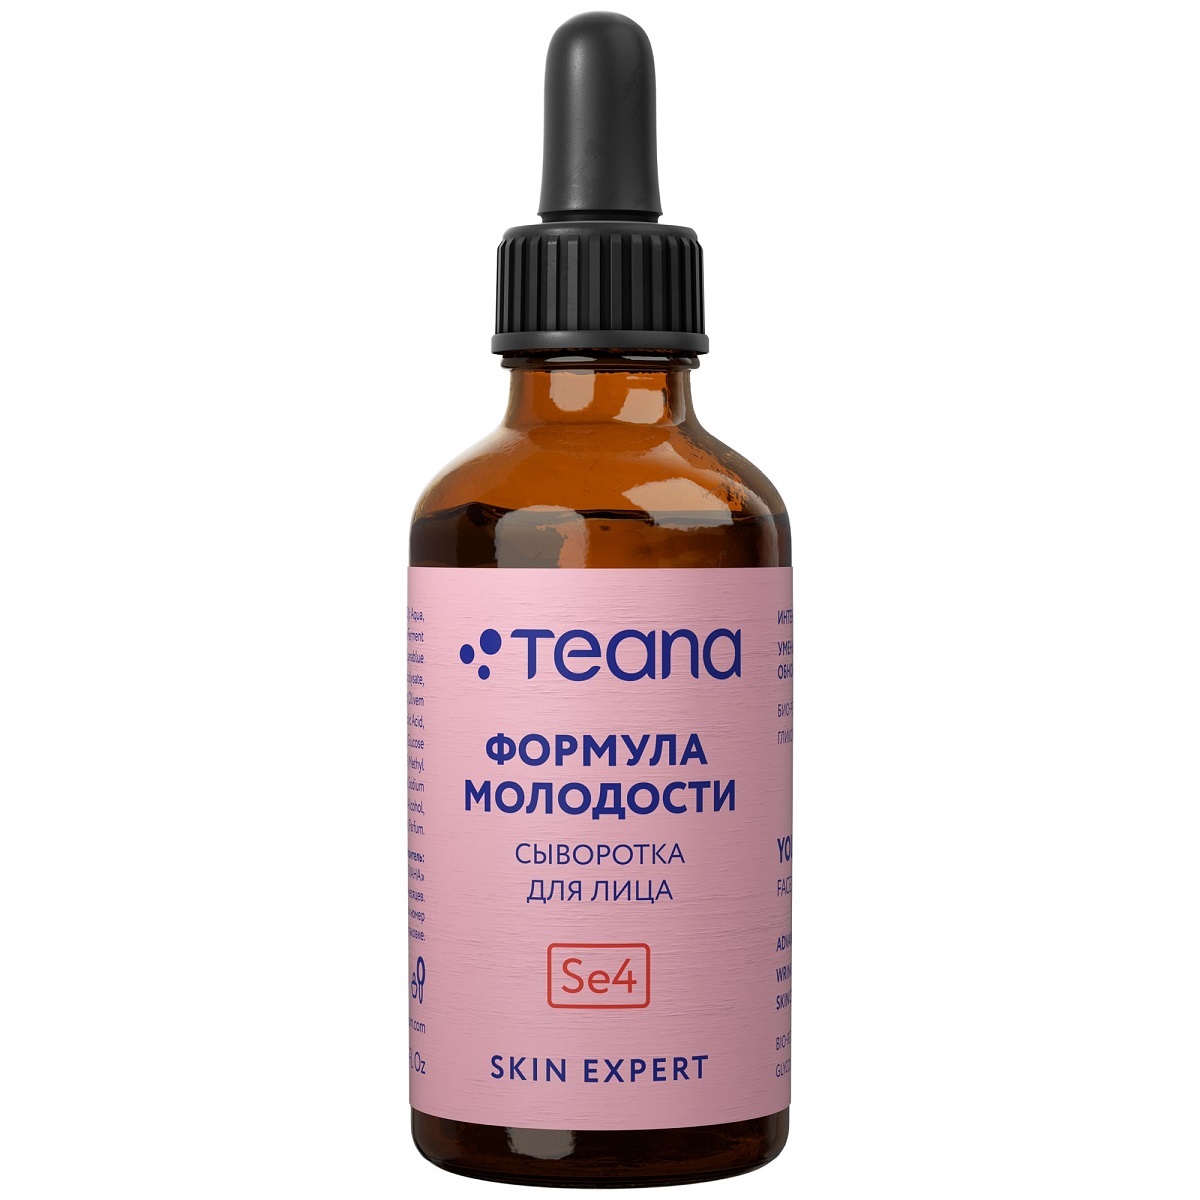 Teana Сыворотка для лица Se4 Формула молодости, 30 мл (Teana, Skin Expert)